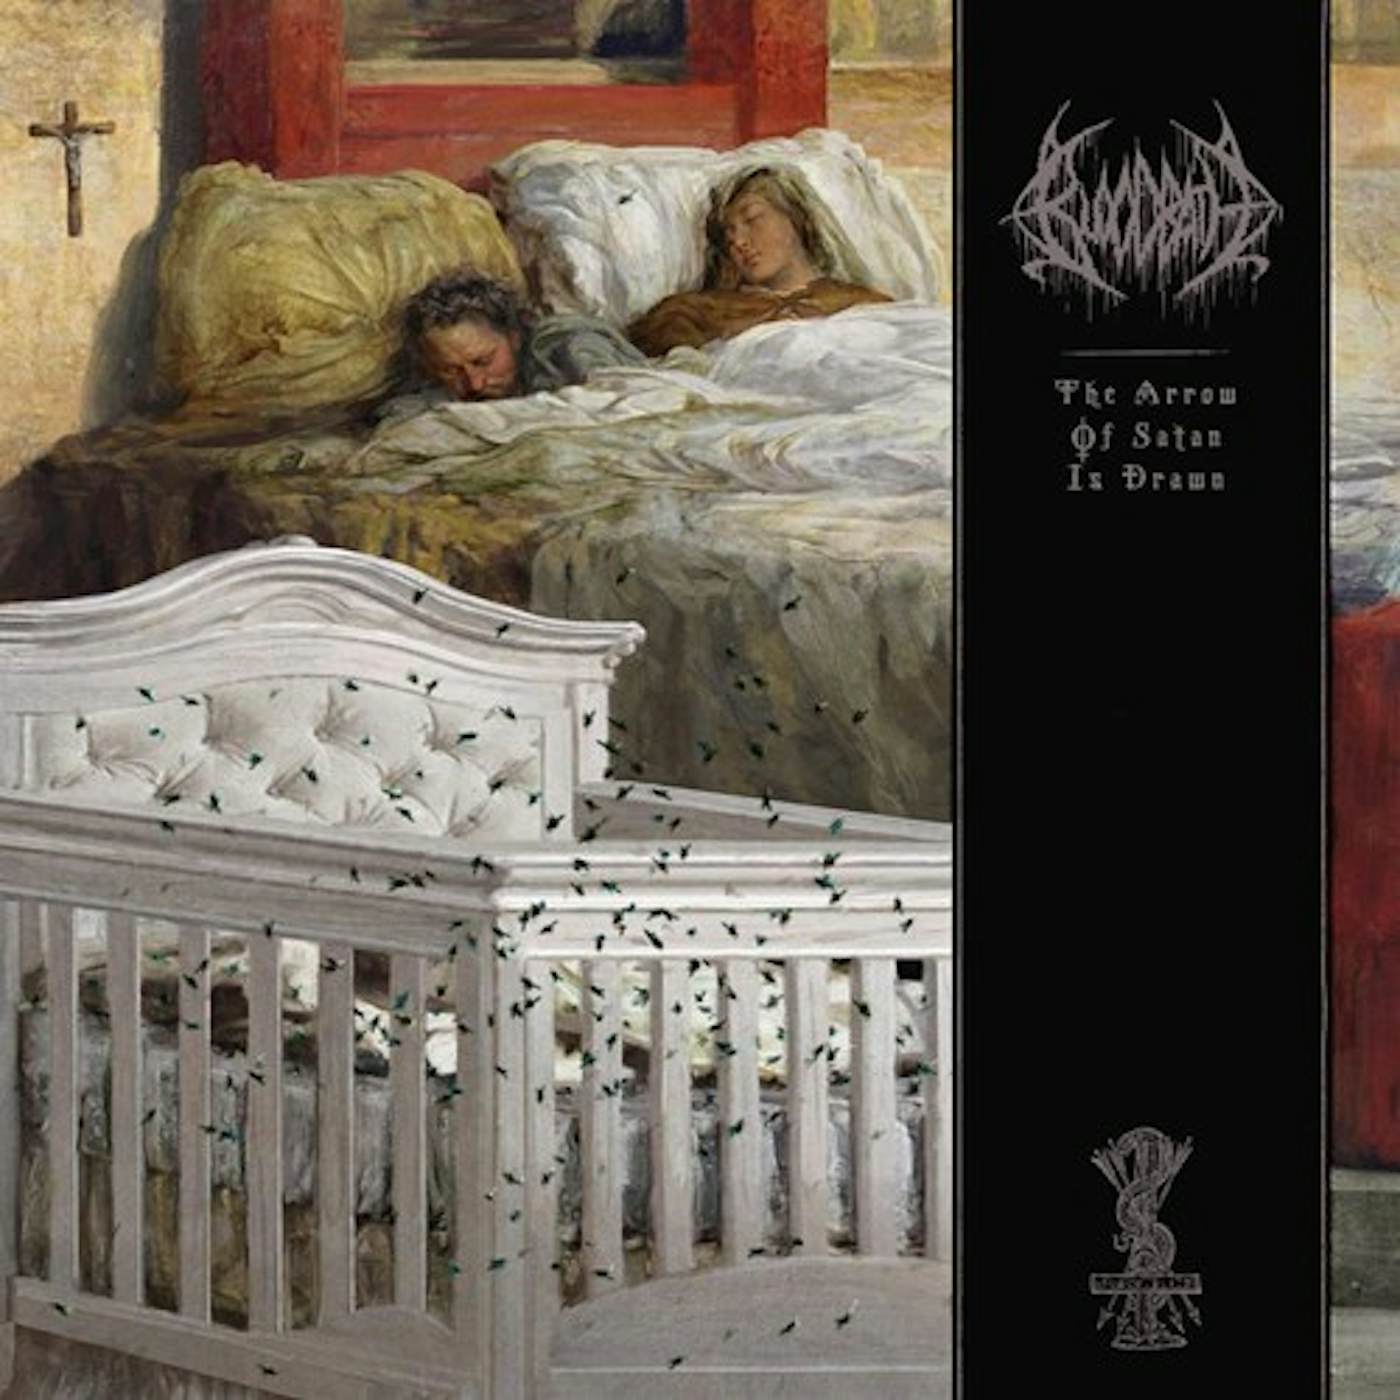 Bloodbath ARROW OF SATAN IS DRAWN CD